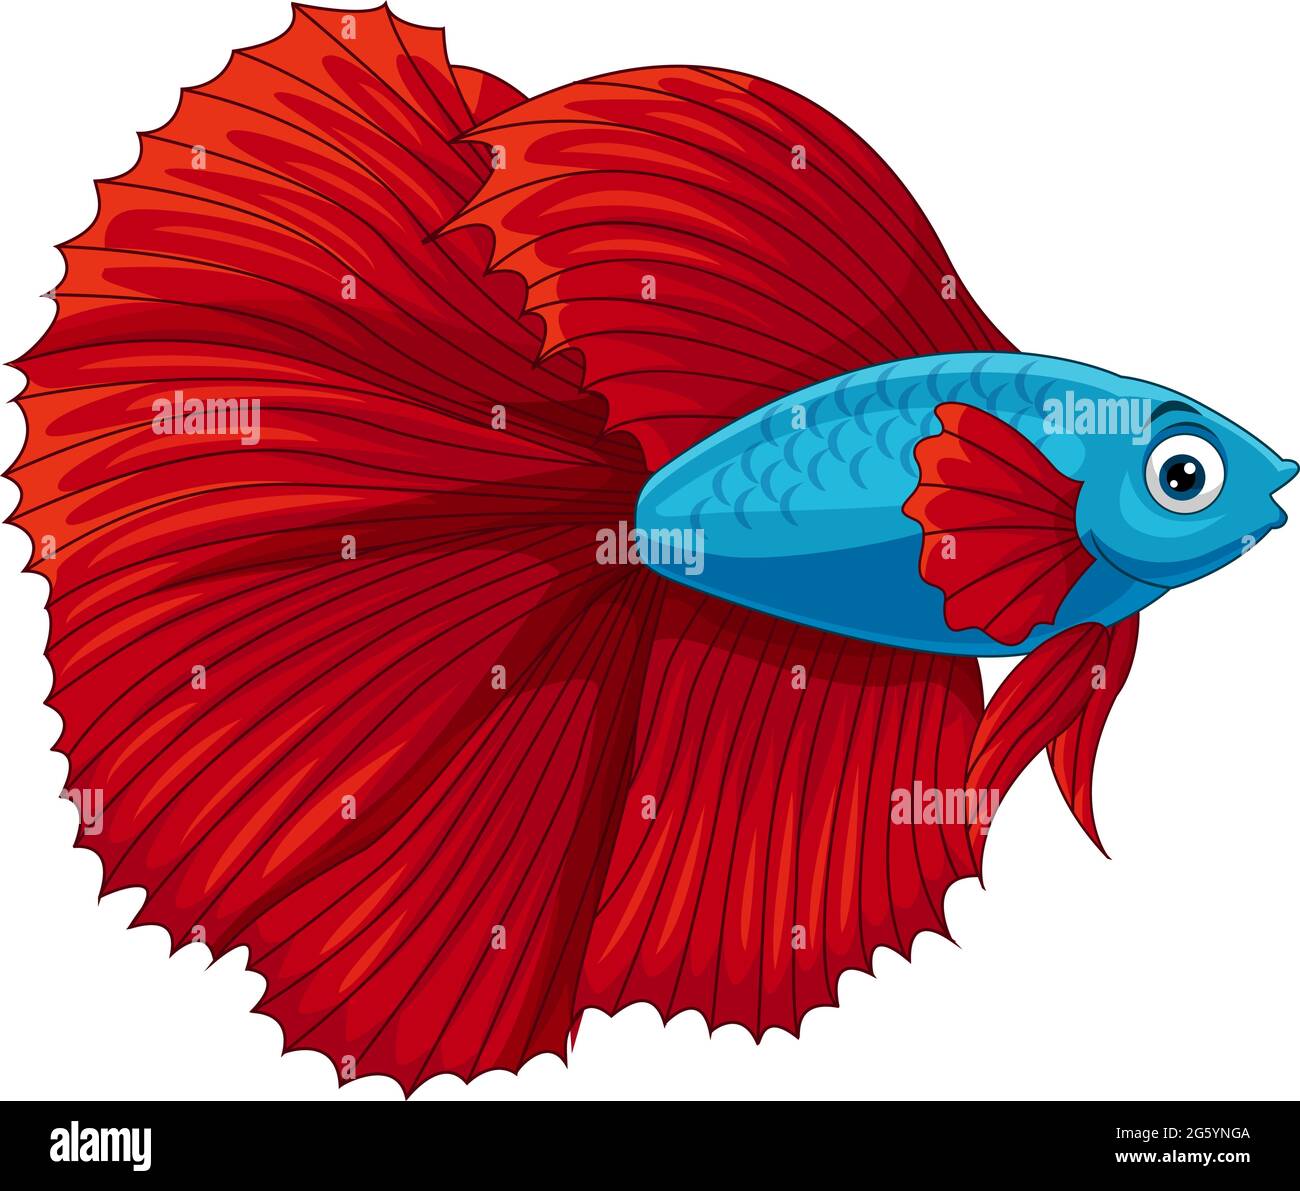 Cartoon betta fish or siamese fighting fish Stock Vector Image & Art - Alamy